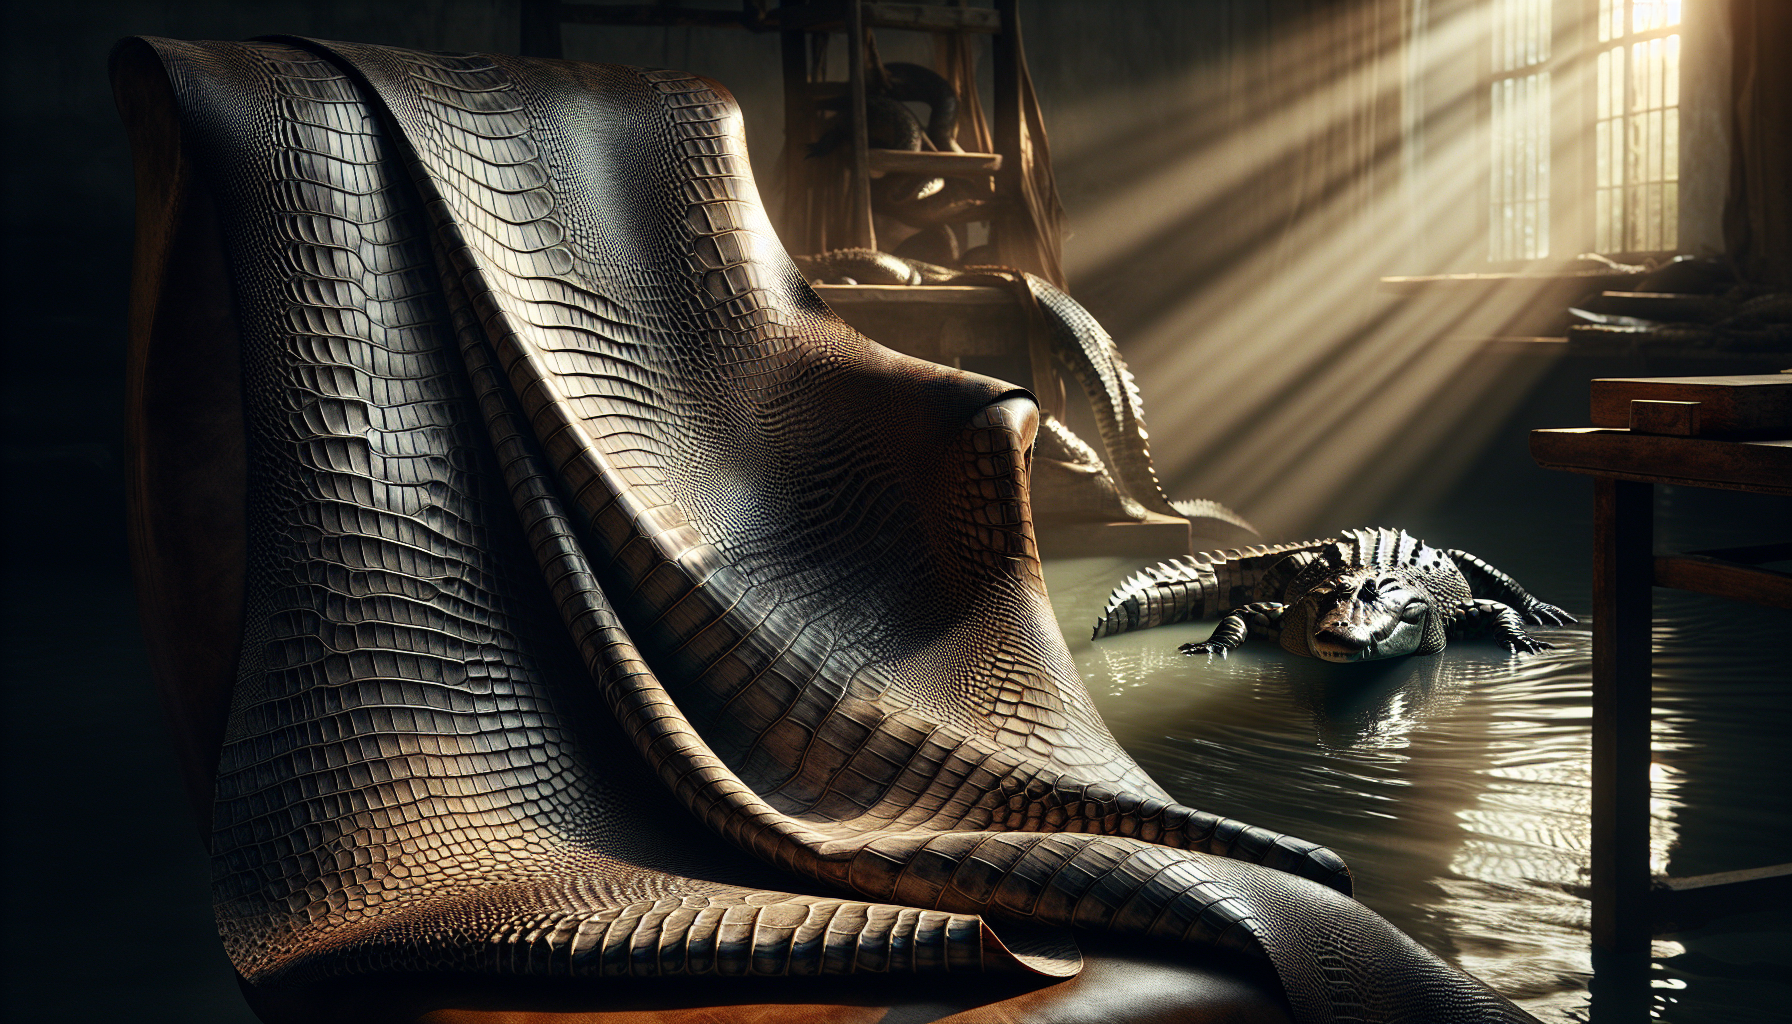 Artistic representation of crocodile leather texture